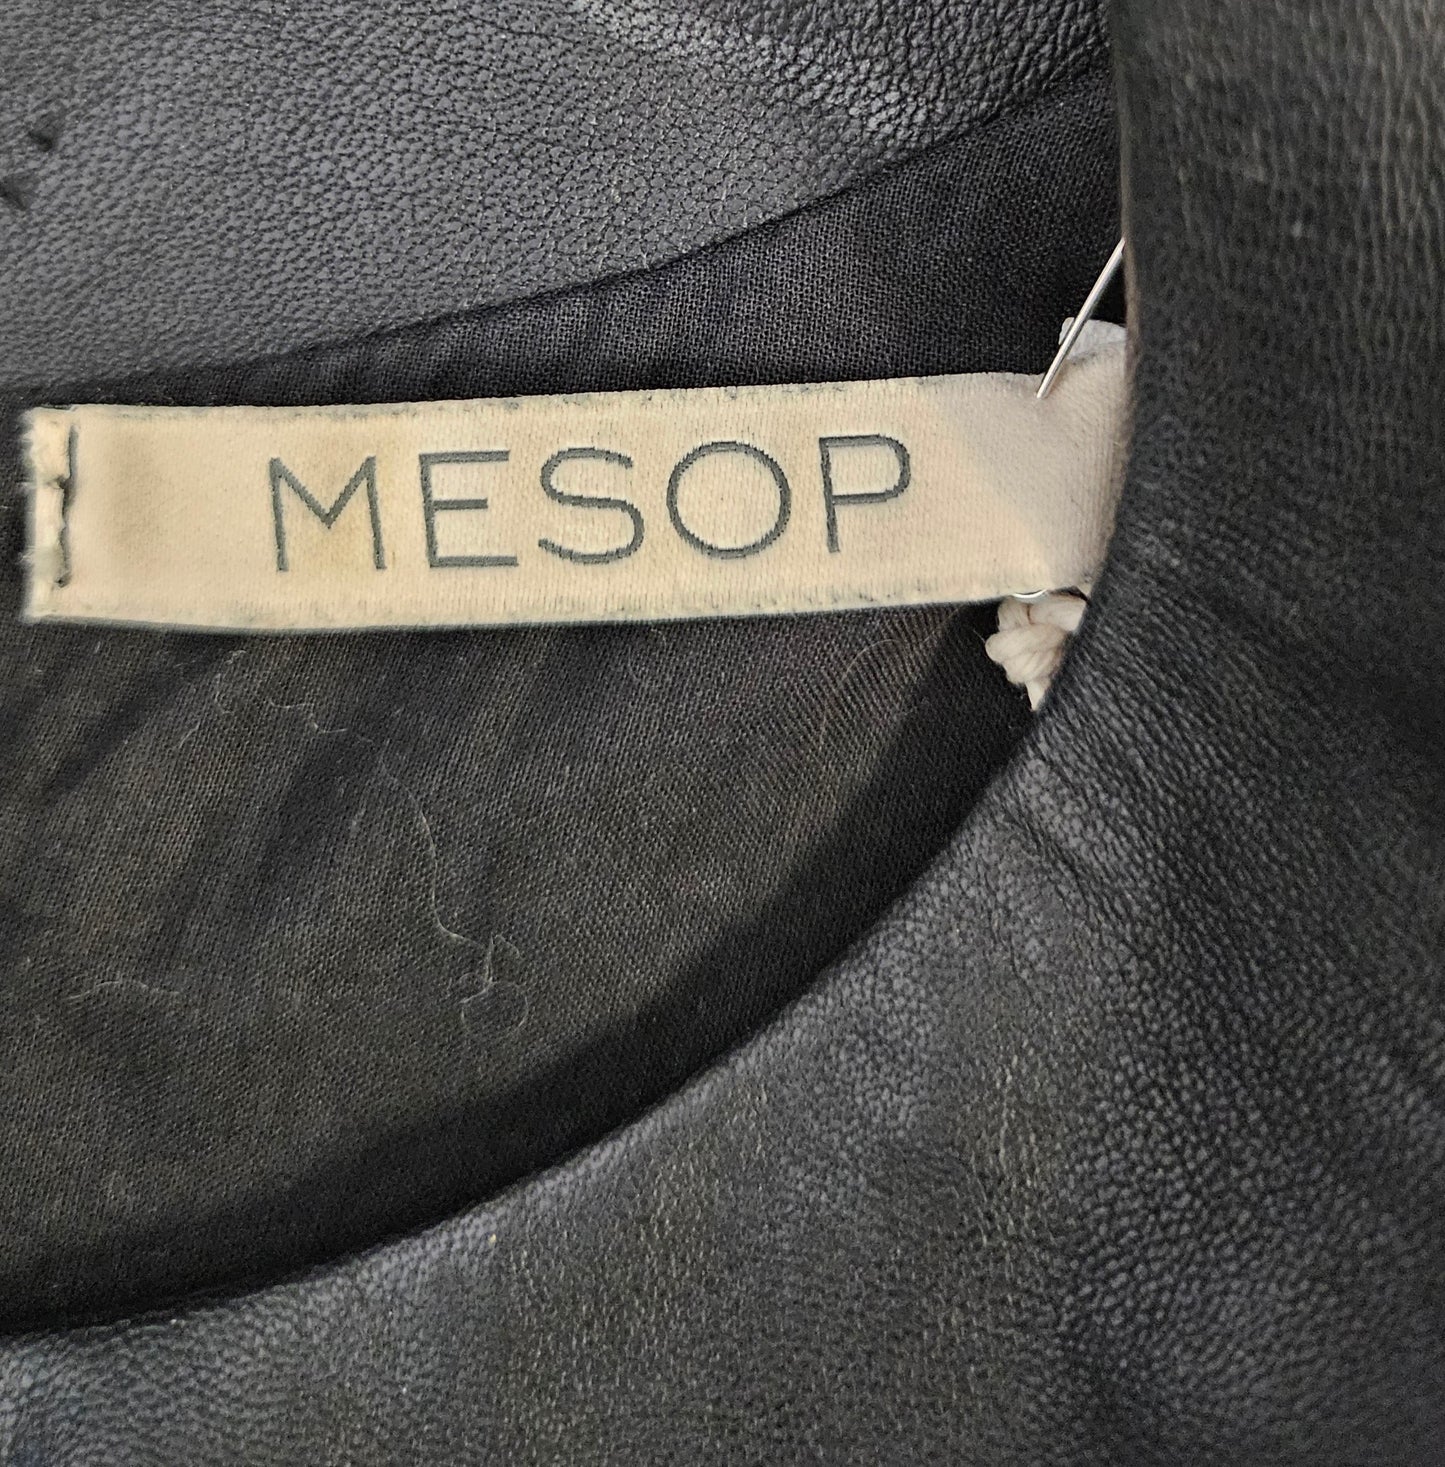 Mesop Black Leather Top (8)